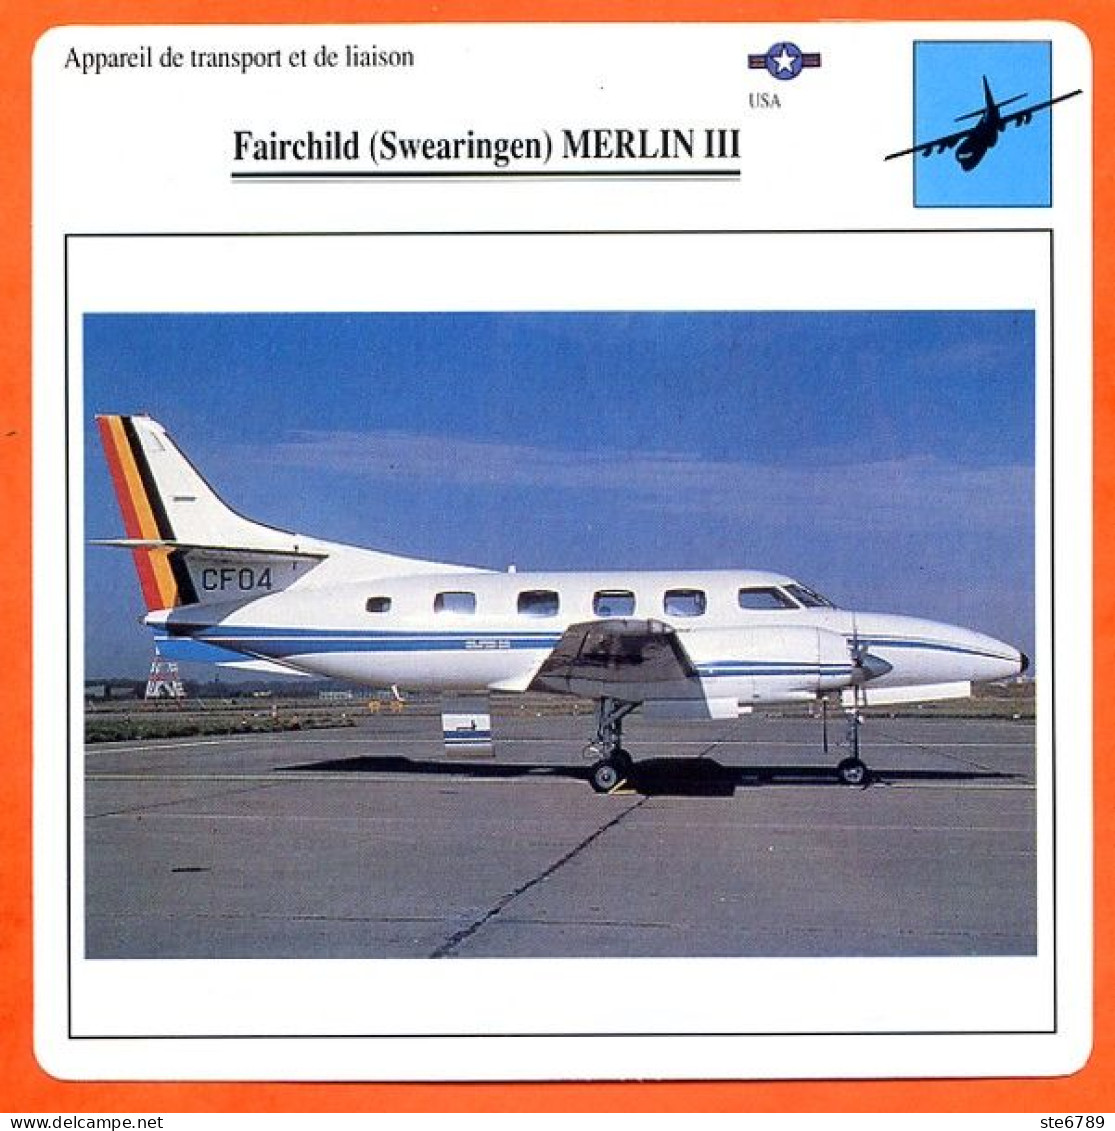 Fiche Aviation Fairchild Swearingen MERLIN III / Avion Transport Et Liaison USA Avions - Avions